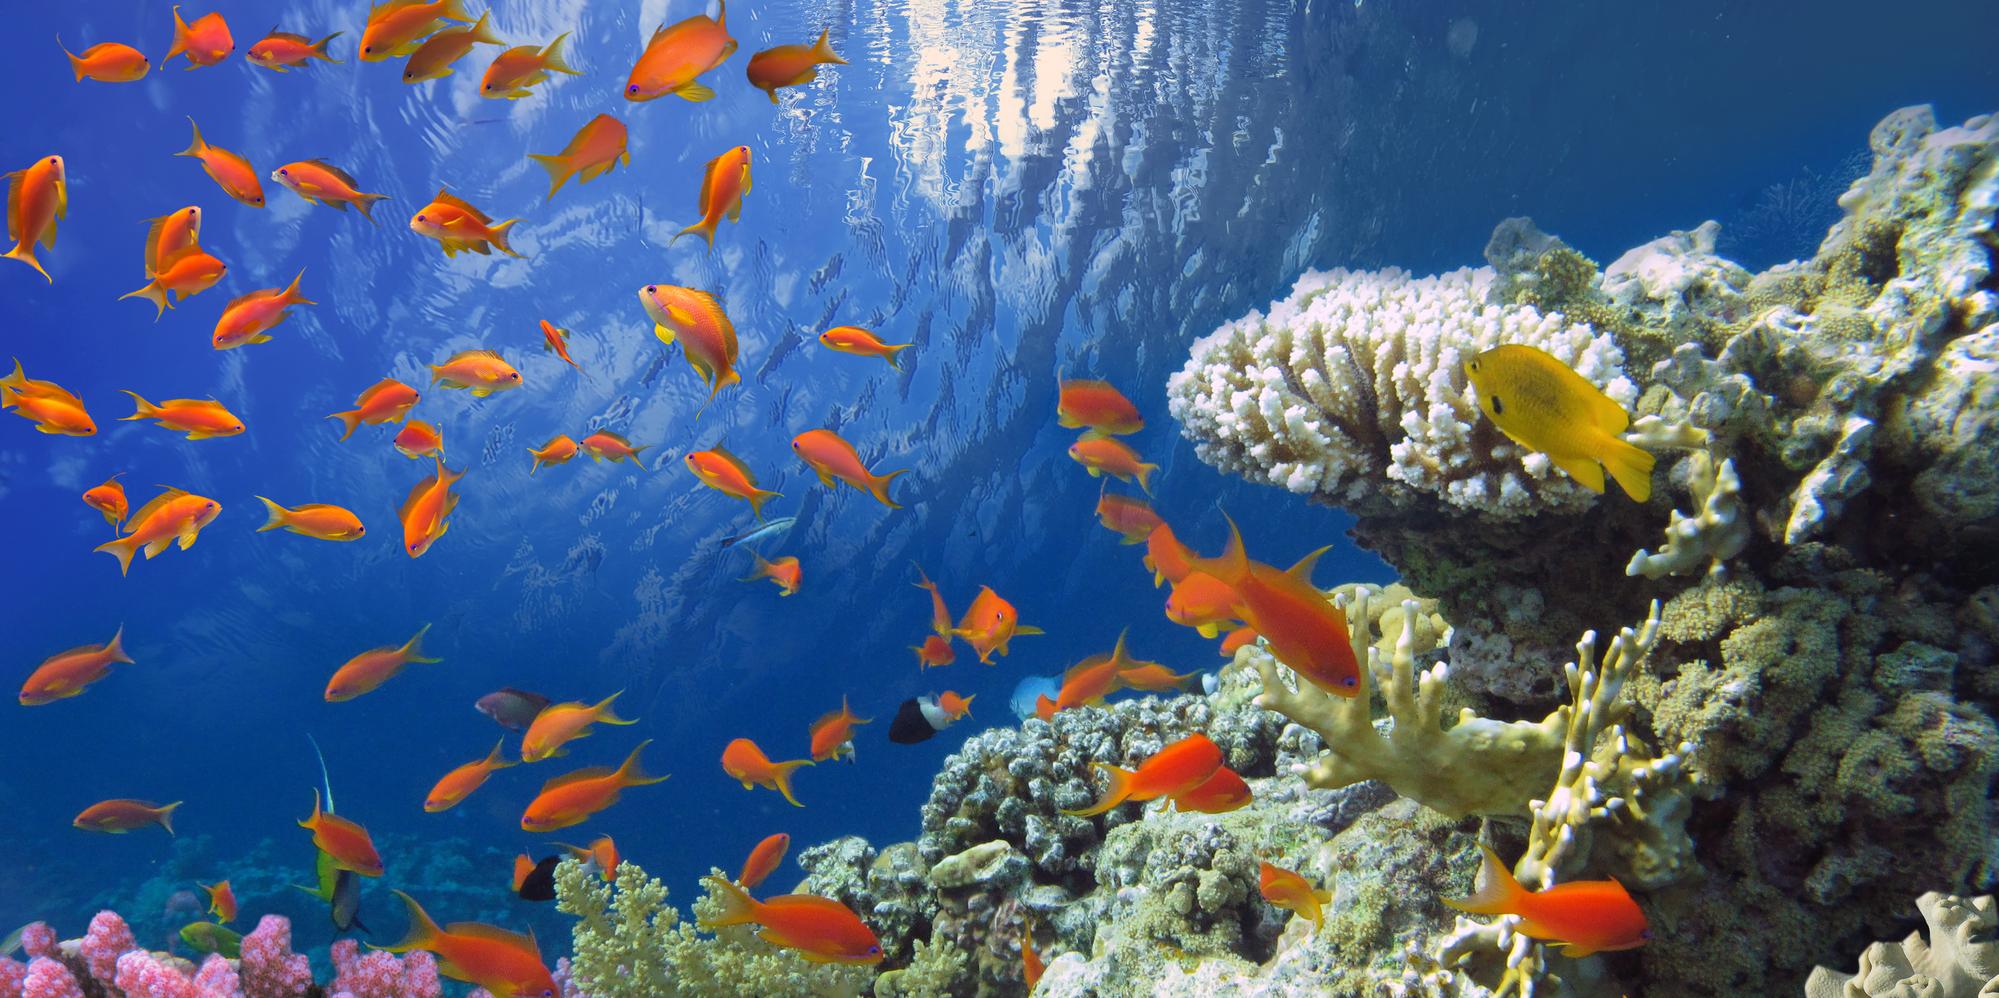 5 Fun Facts About Coral Reefs in Hawaii - KoOlina Ocean Adventures